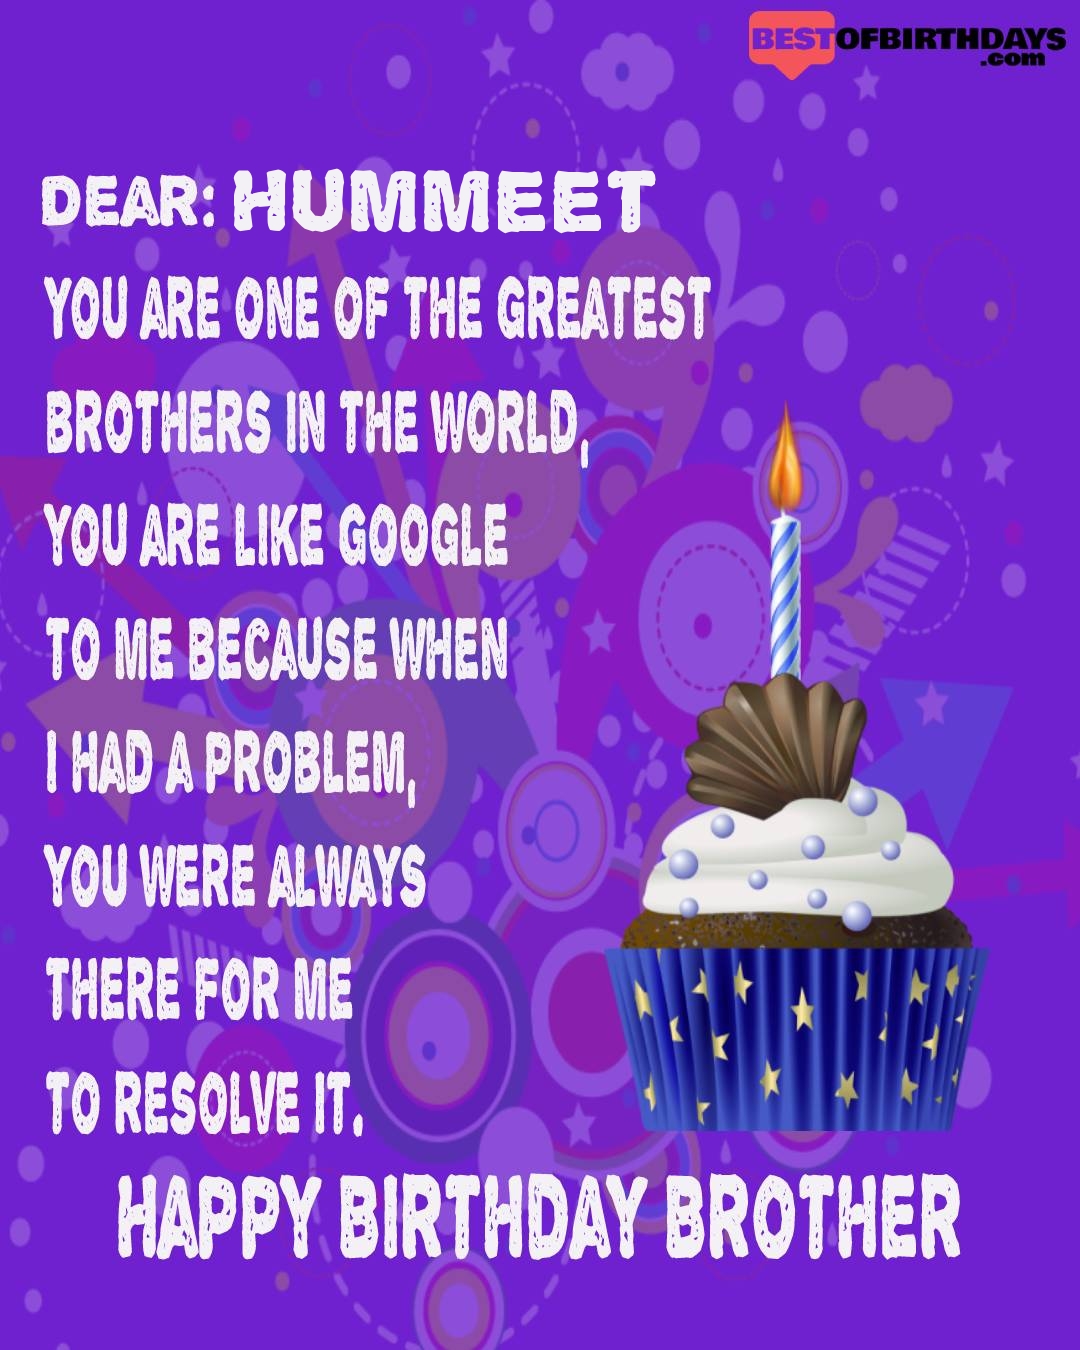 Happy birthday hummeet bhai brother bro